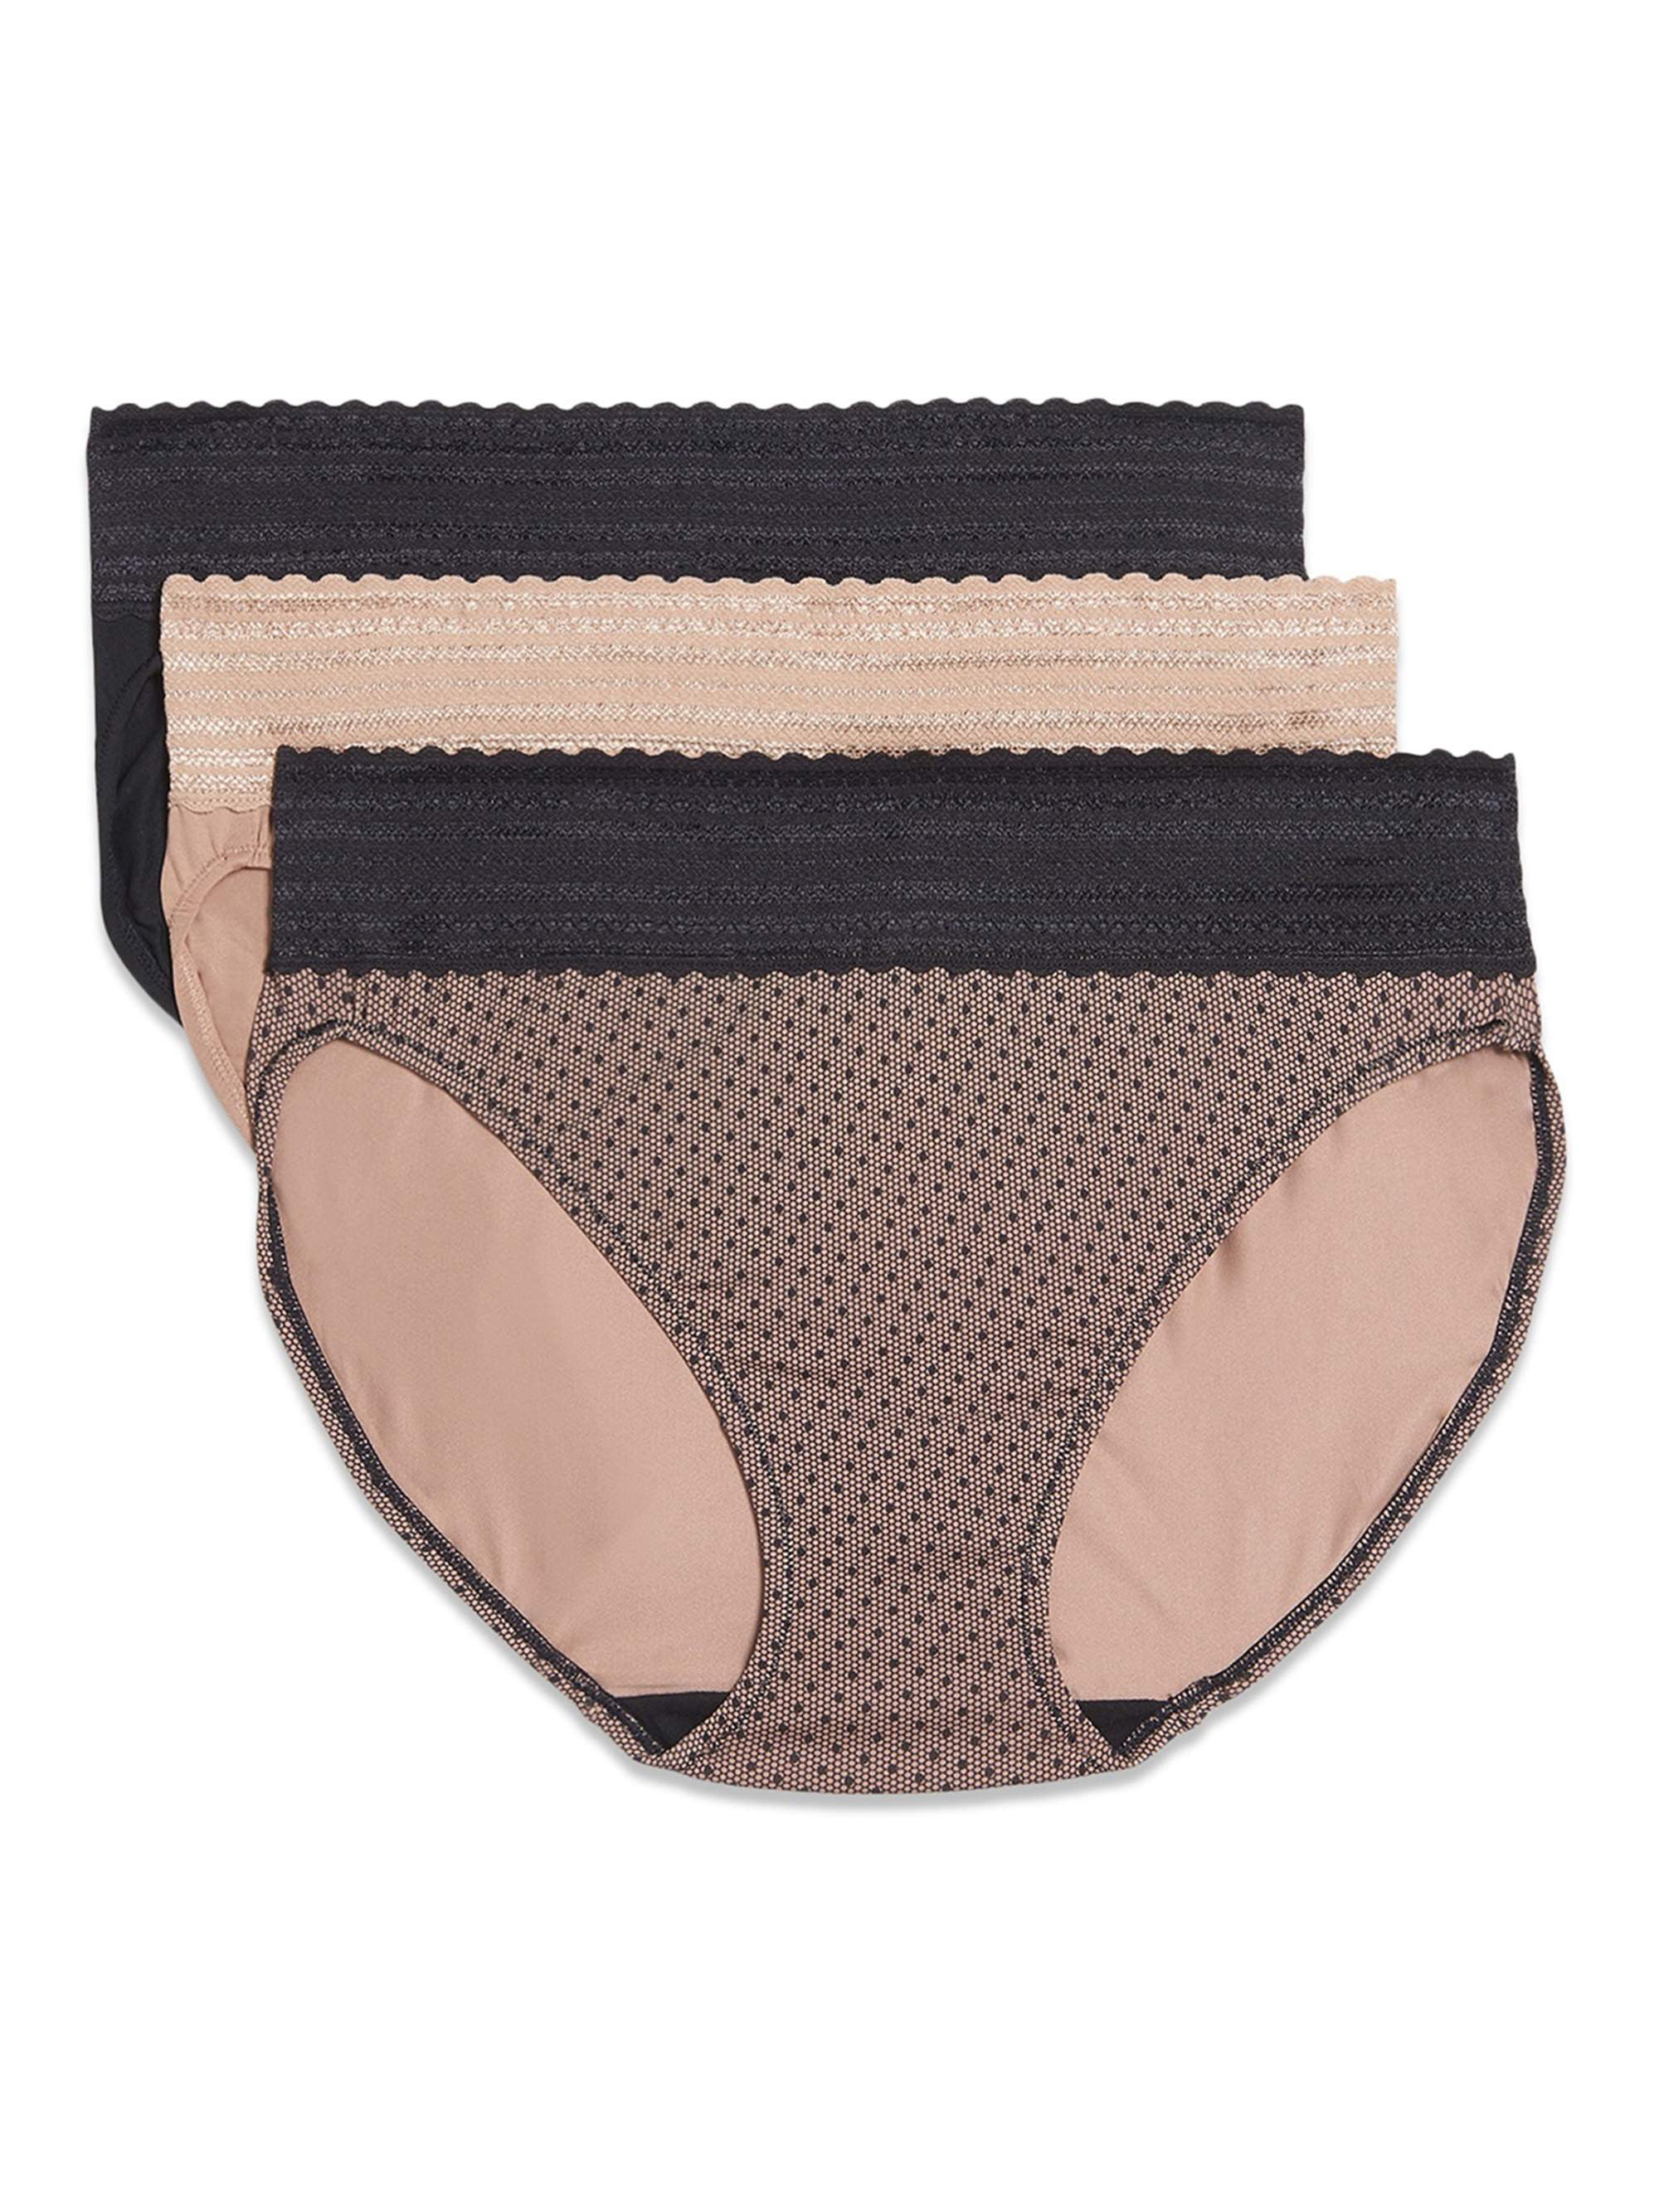 Bali Womens Comfort Revolution Microfiber Seamless Hi Cut Panty -  Best-Seller, 